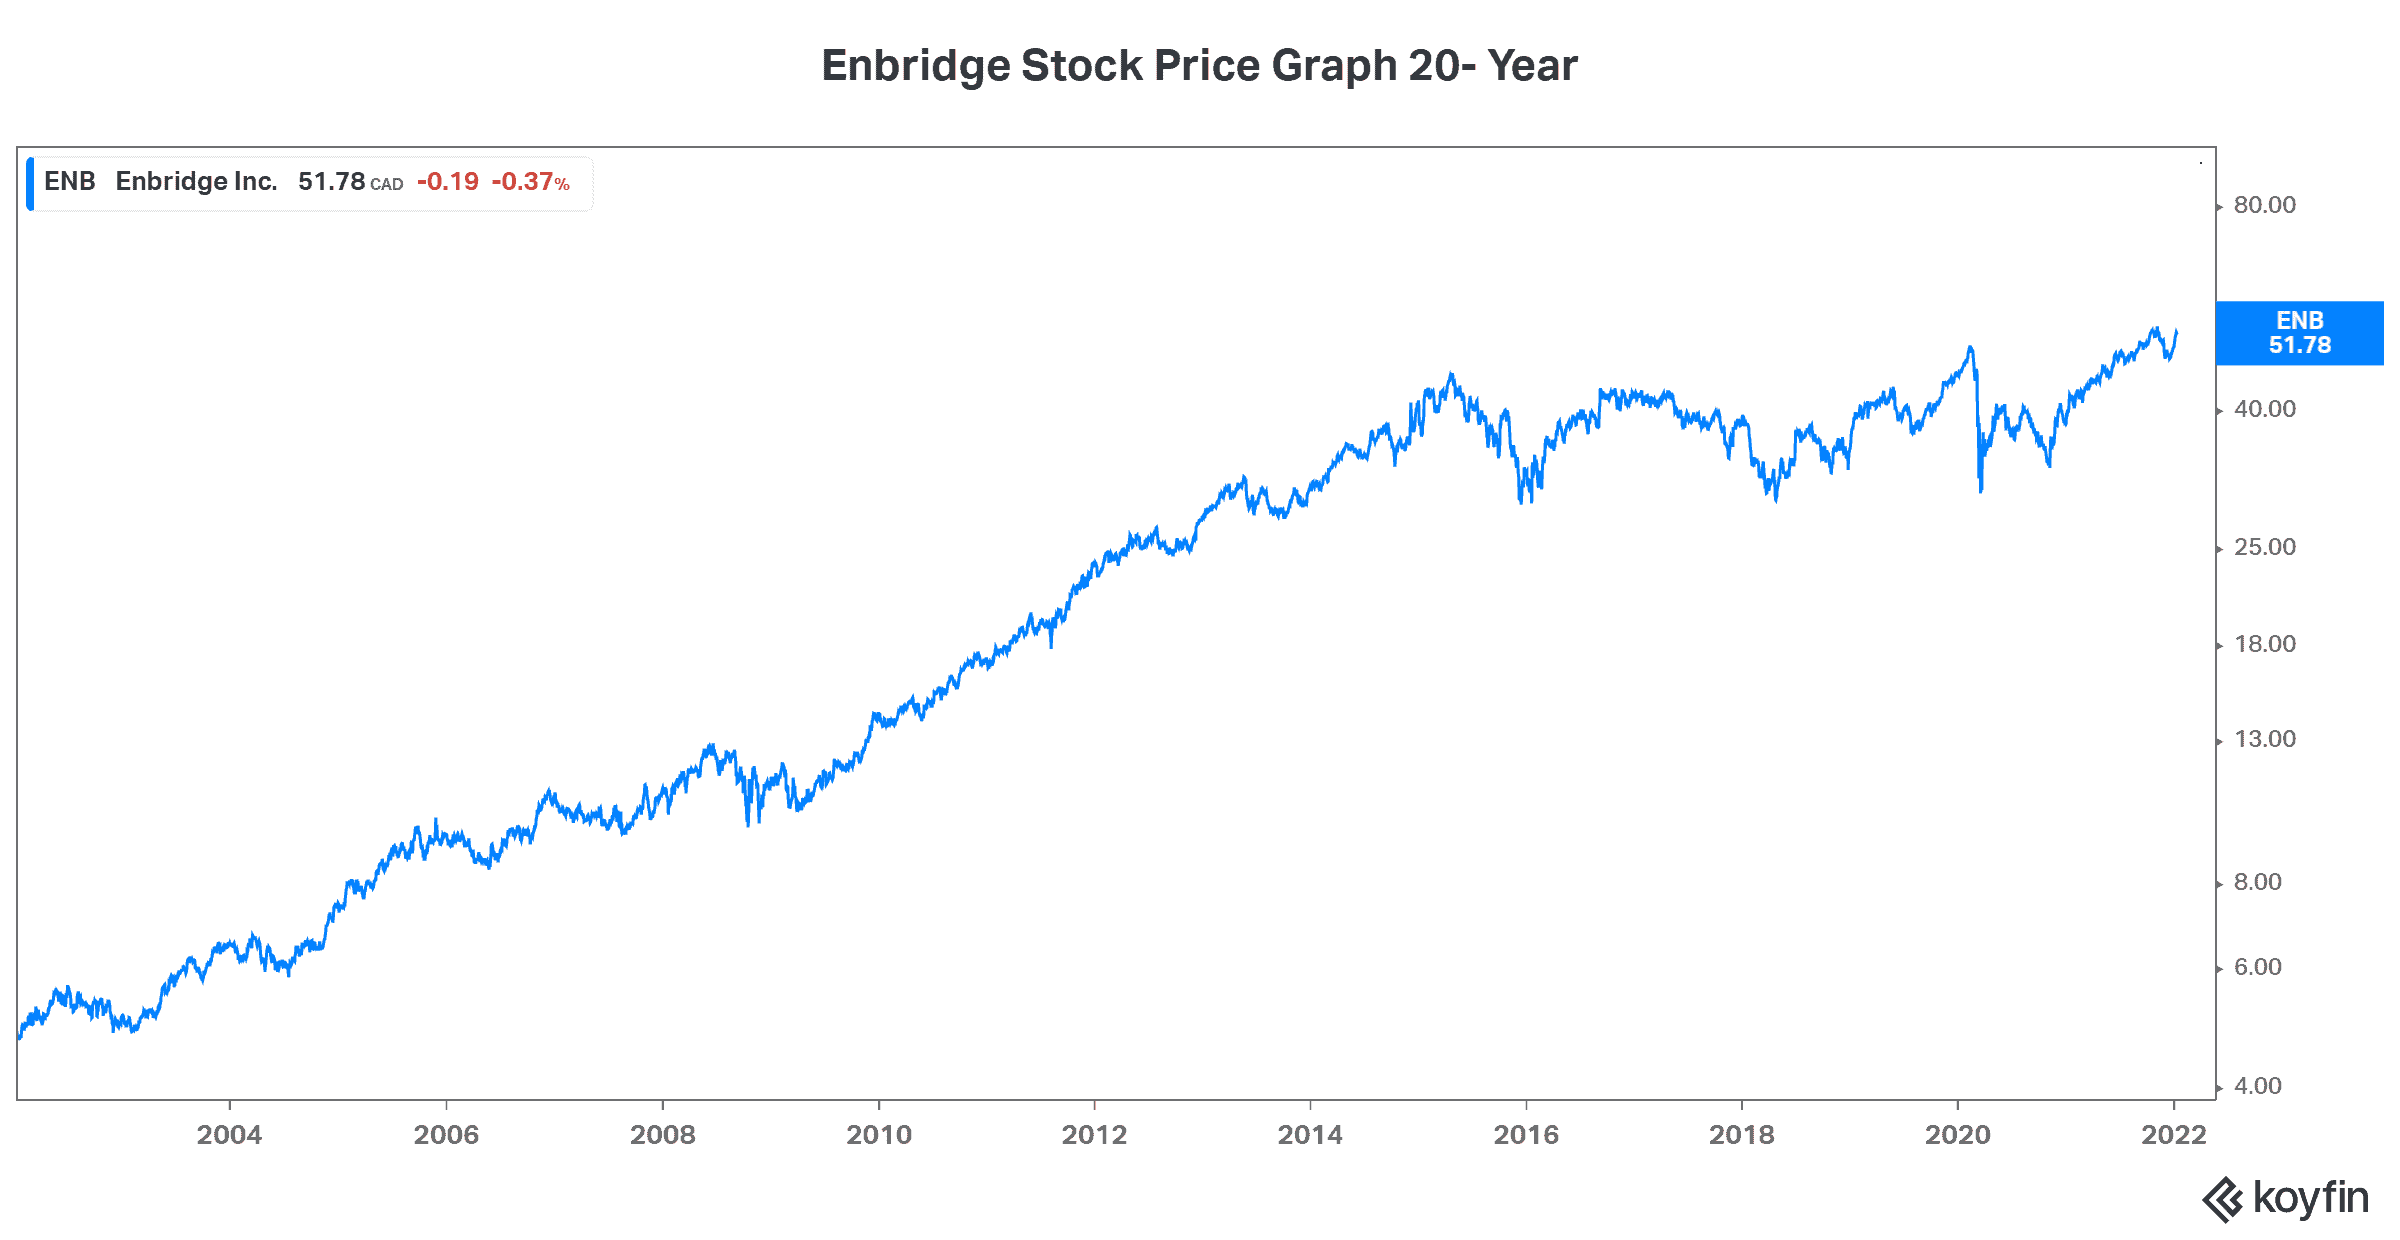 Dividend stock Enbridge stock price 